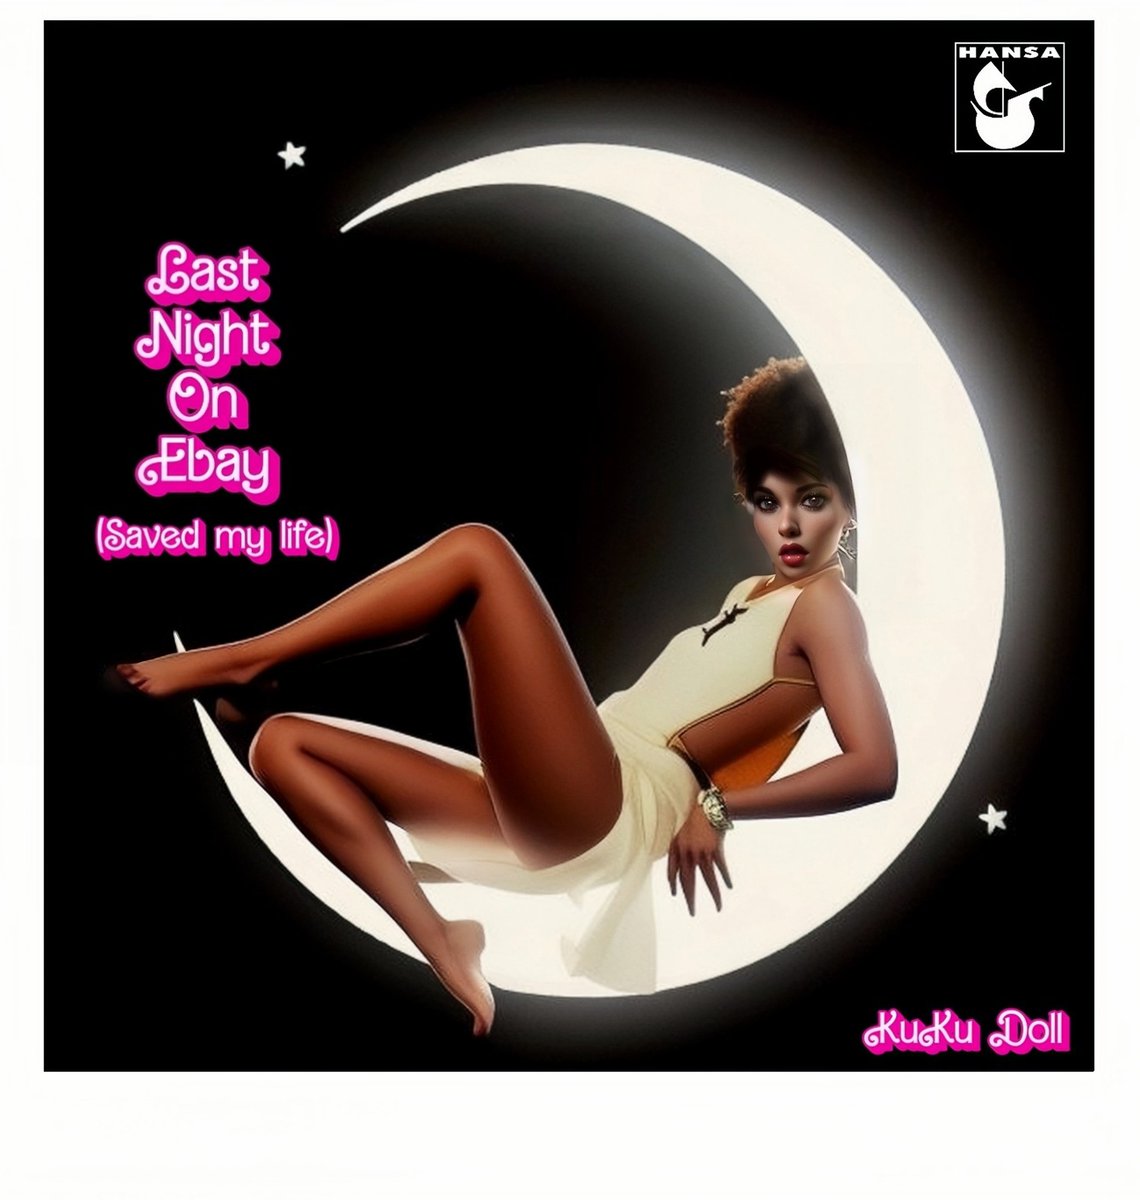 'Last Night on Ebay (Saved my Life)', the new EP from Kuku Doll...
kvkv.bandcamp.com/album/last-nig…
#bandcamp #bandcampmusic #disco #futurefunk #vaporwave #vaporwaveaesthetic #1970s #1980s #NEWWAVE #Dolls #boogie #baccara #hansa #artrock #funk #dance #nudisco